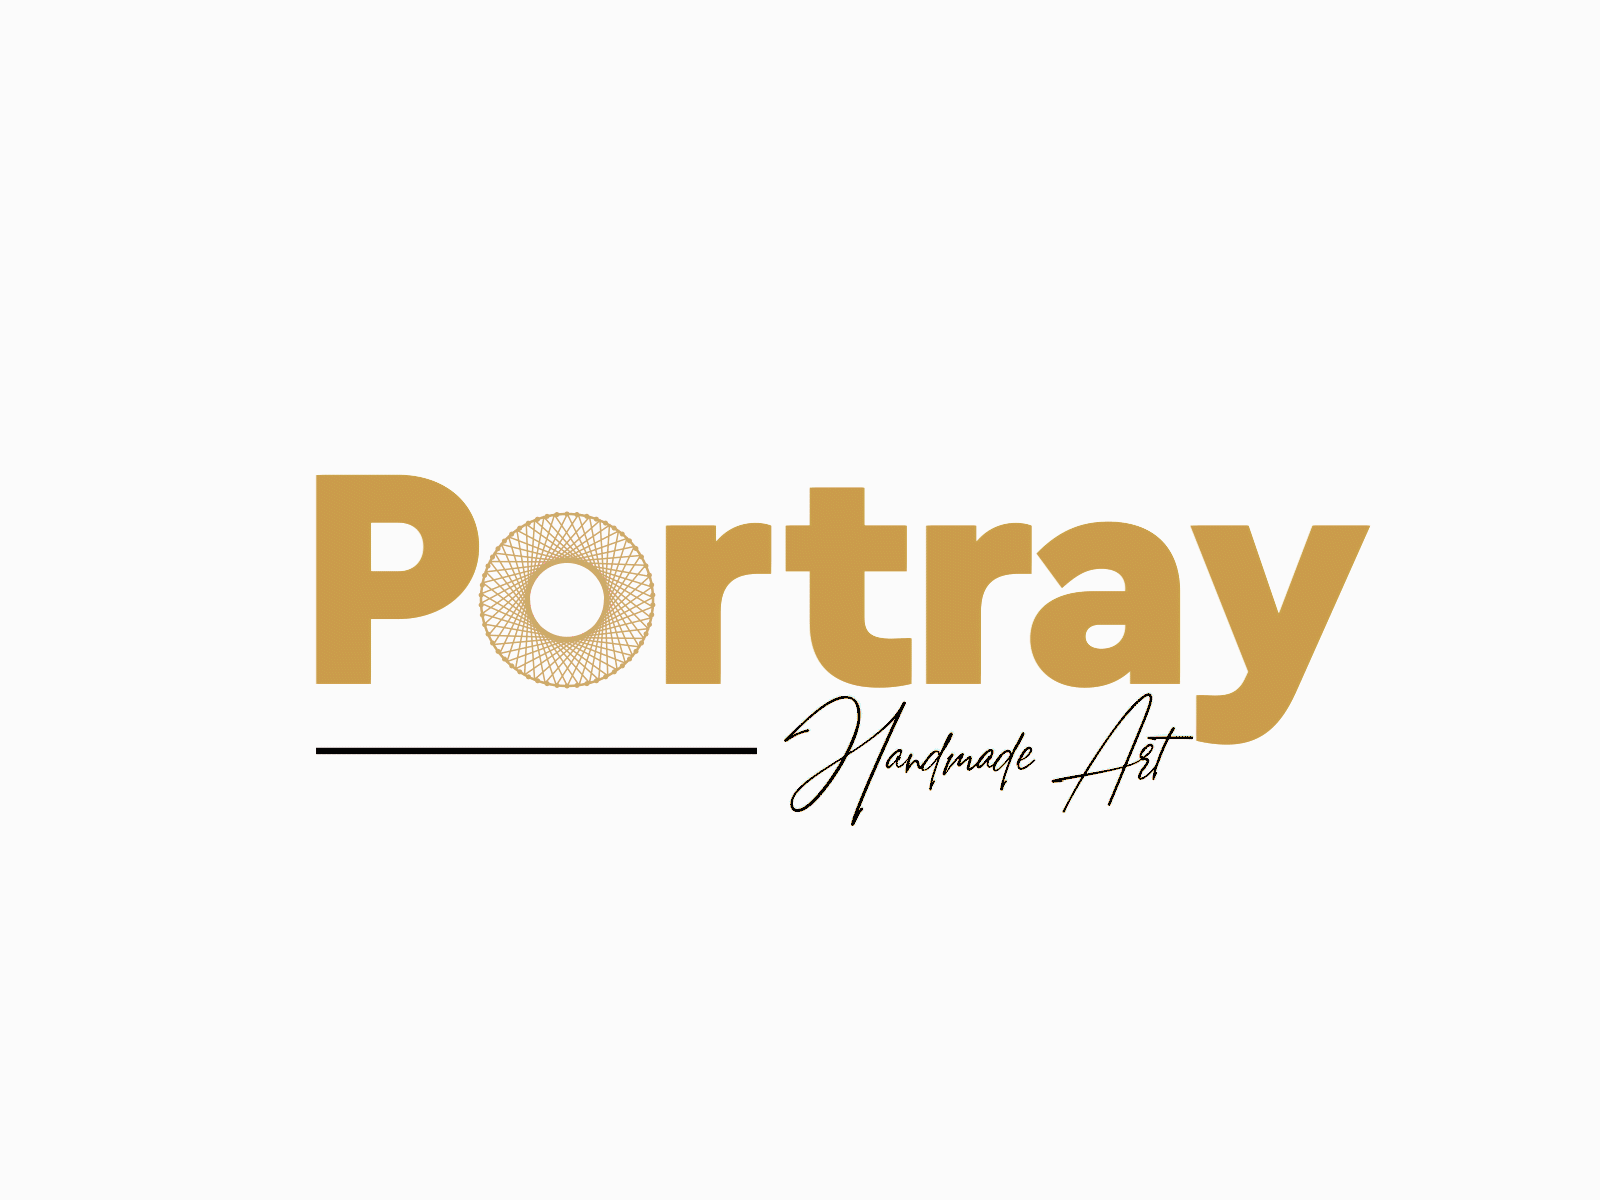 Portray - Handmade Arts Logo Animation || Motion Graphics Design